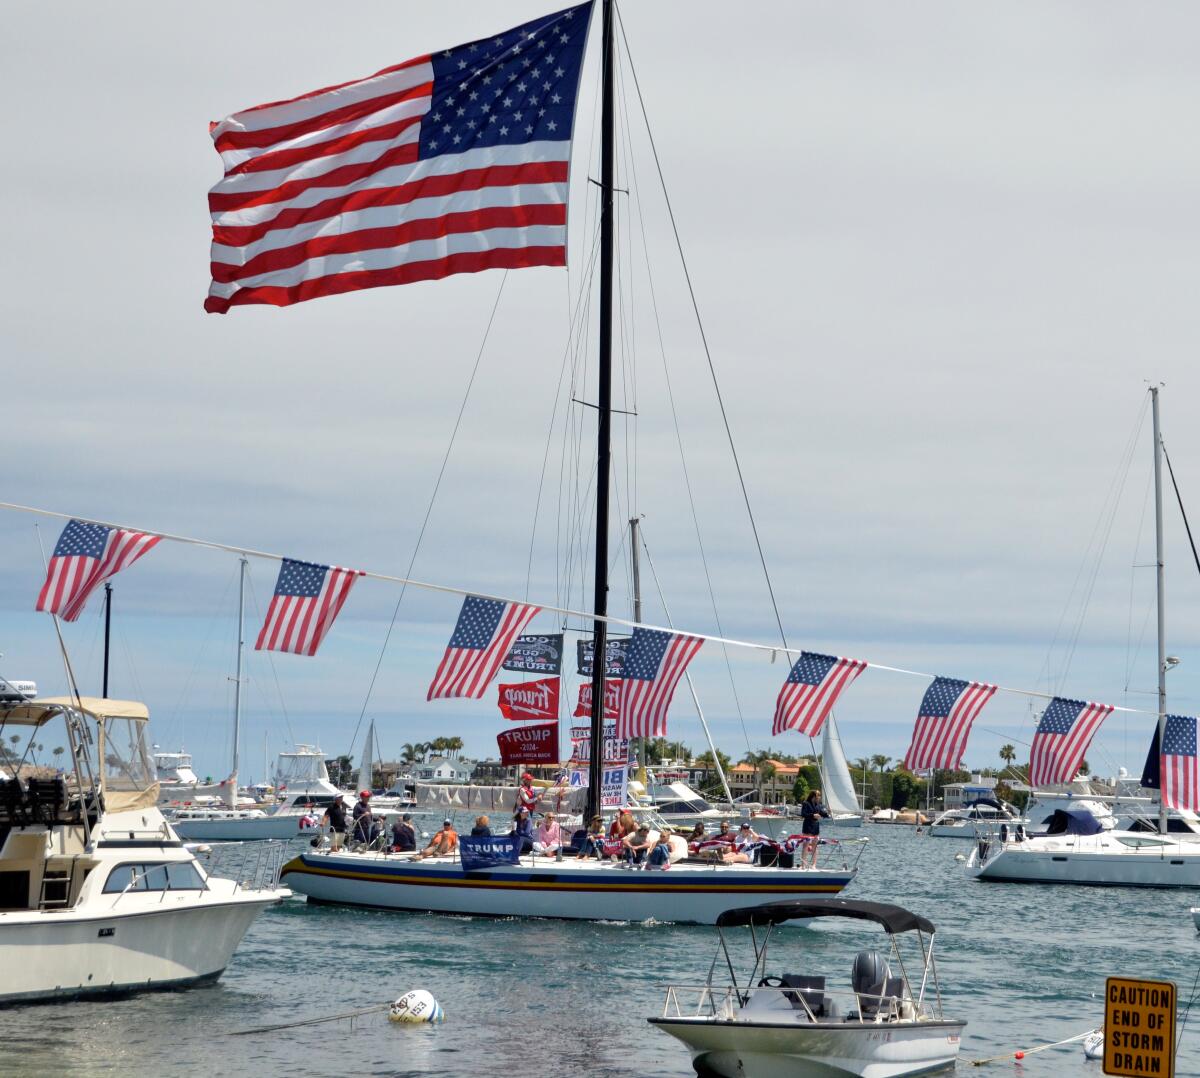 A large sailboat bearing an equally large American flag navigated the narrow waterway.